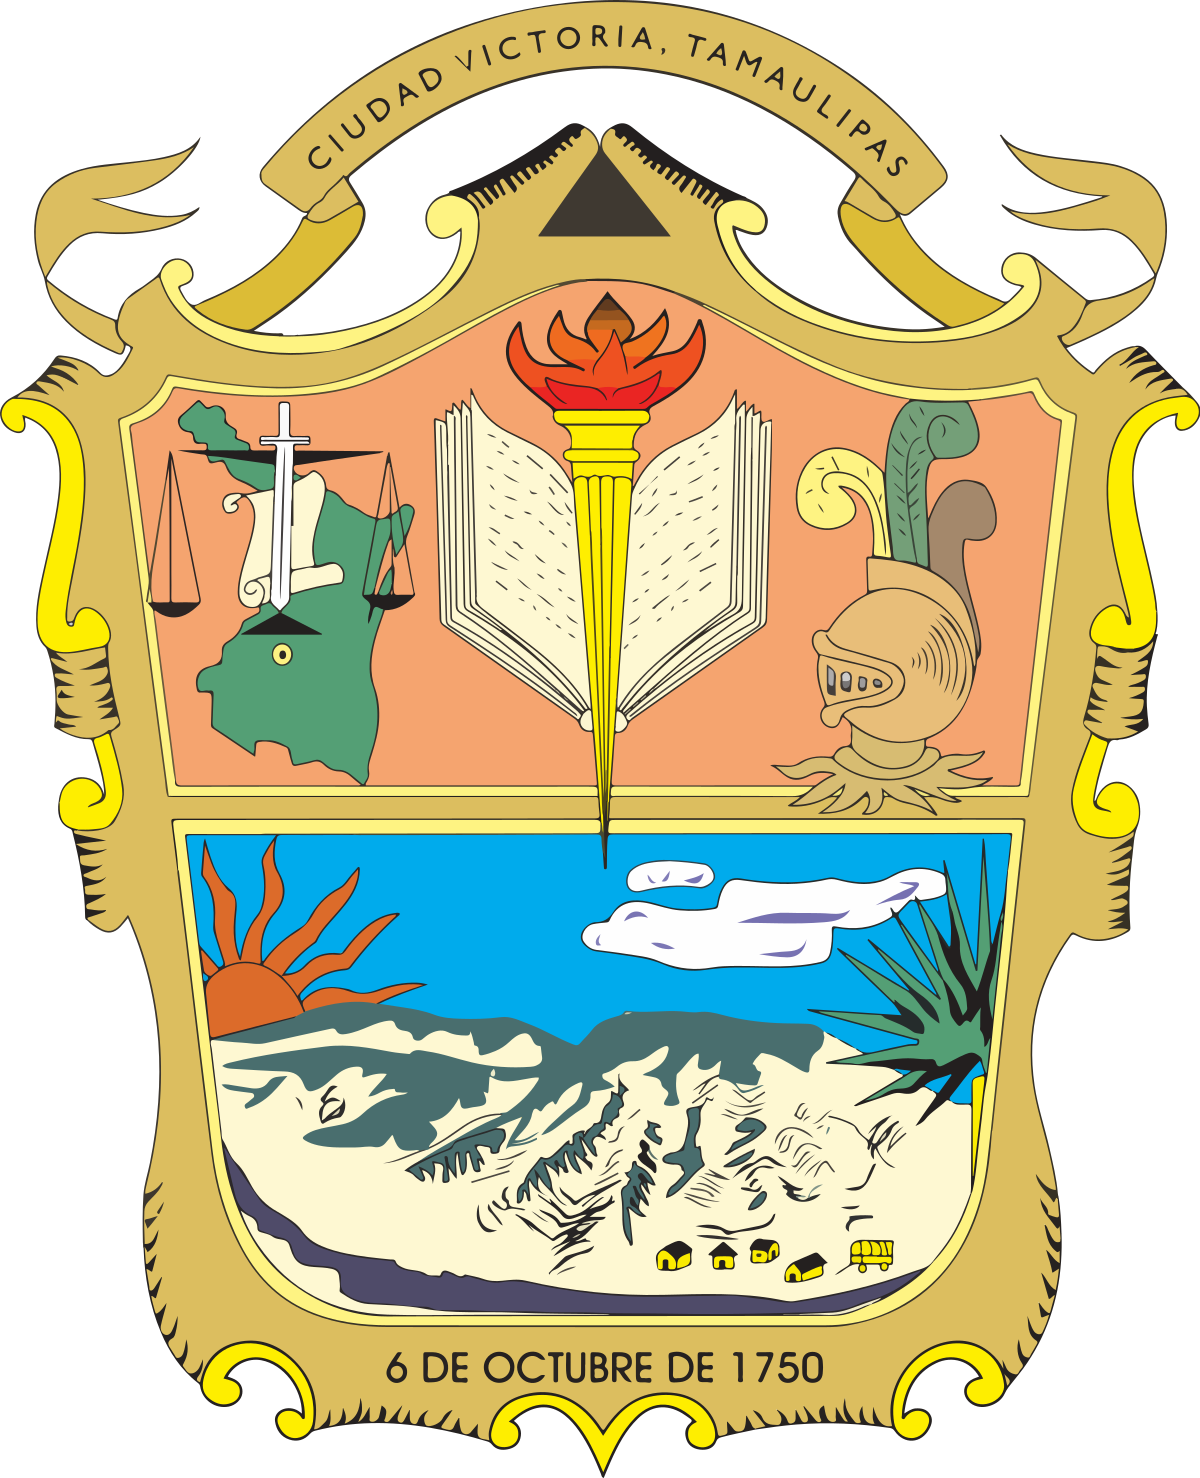 Gobierno municipal de Victoria, Tamaulipas